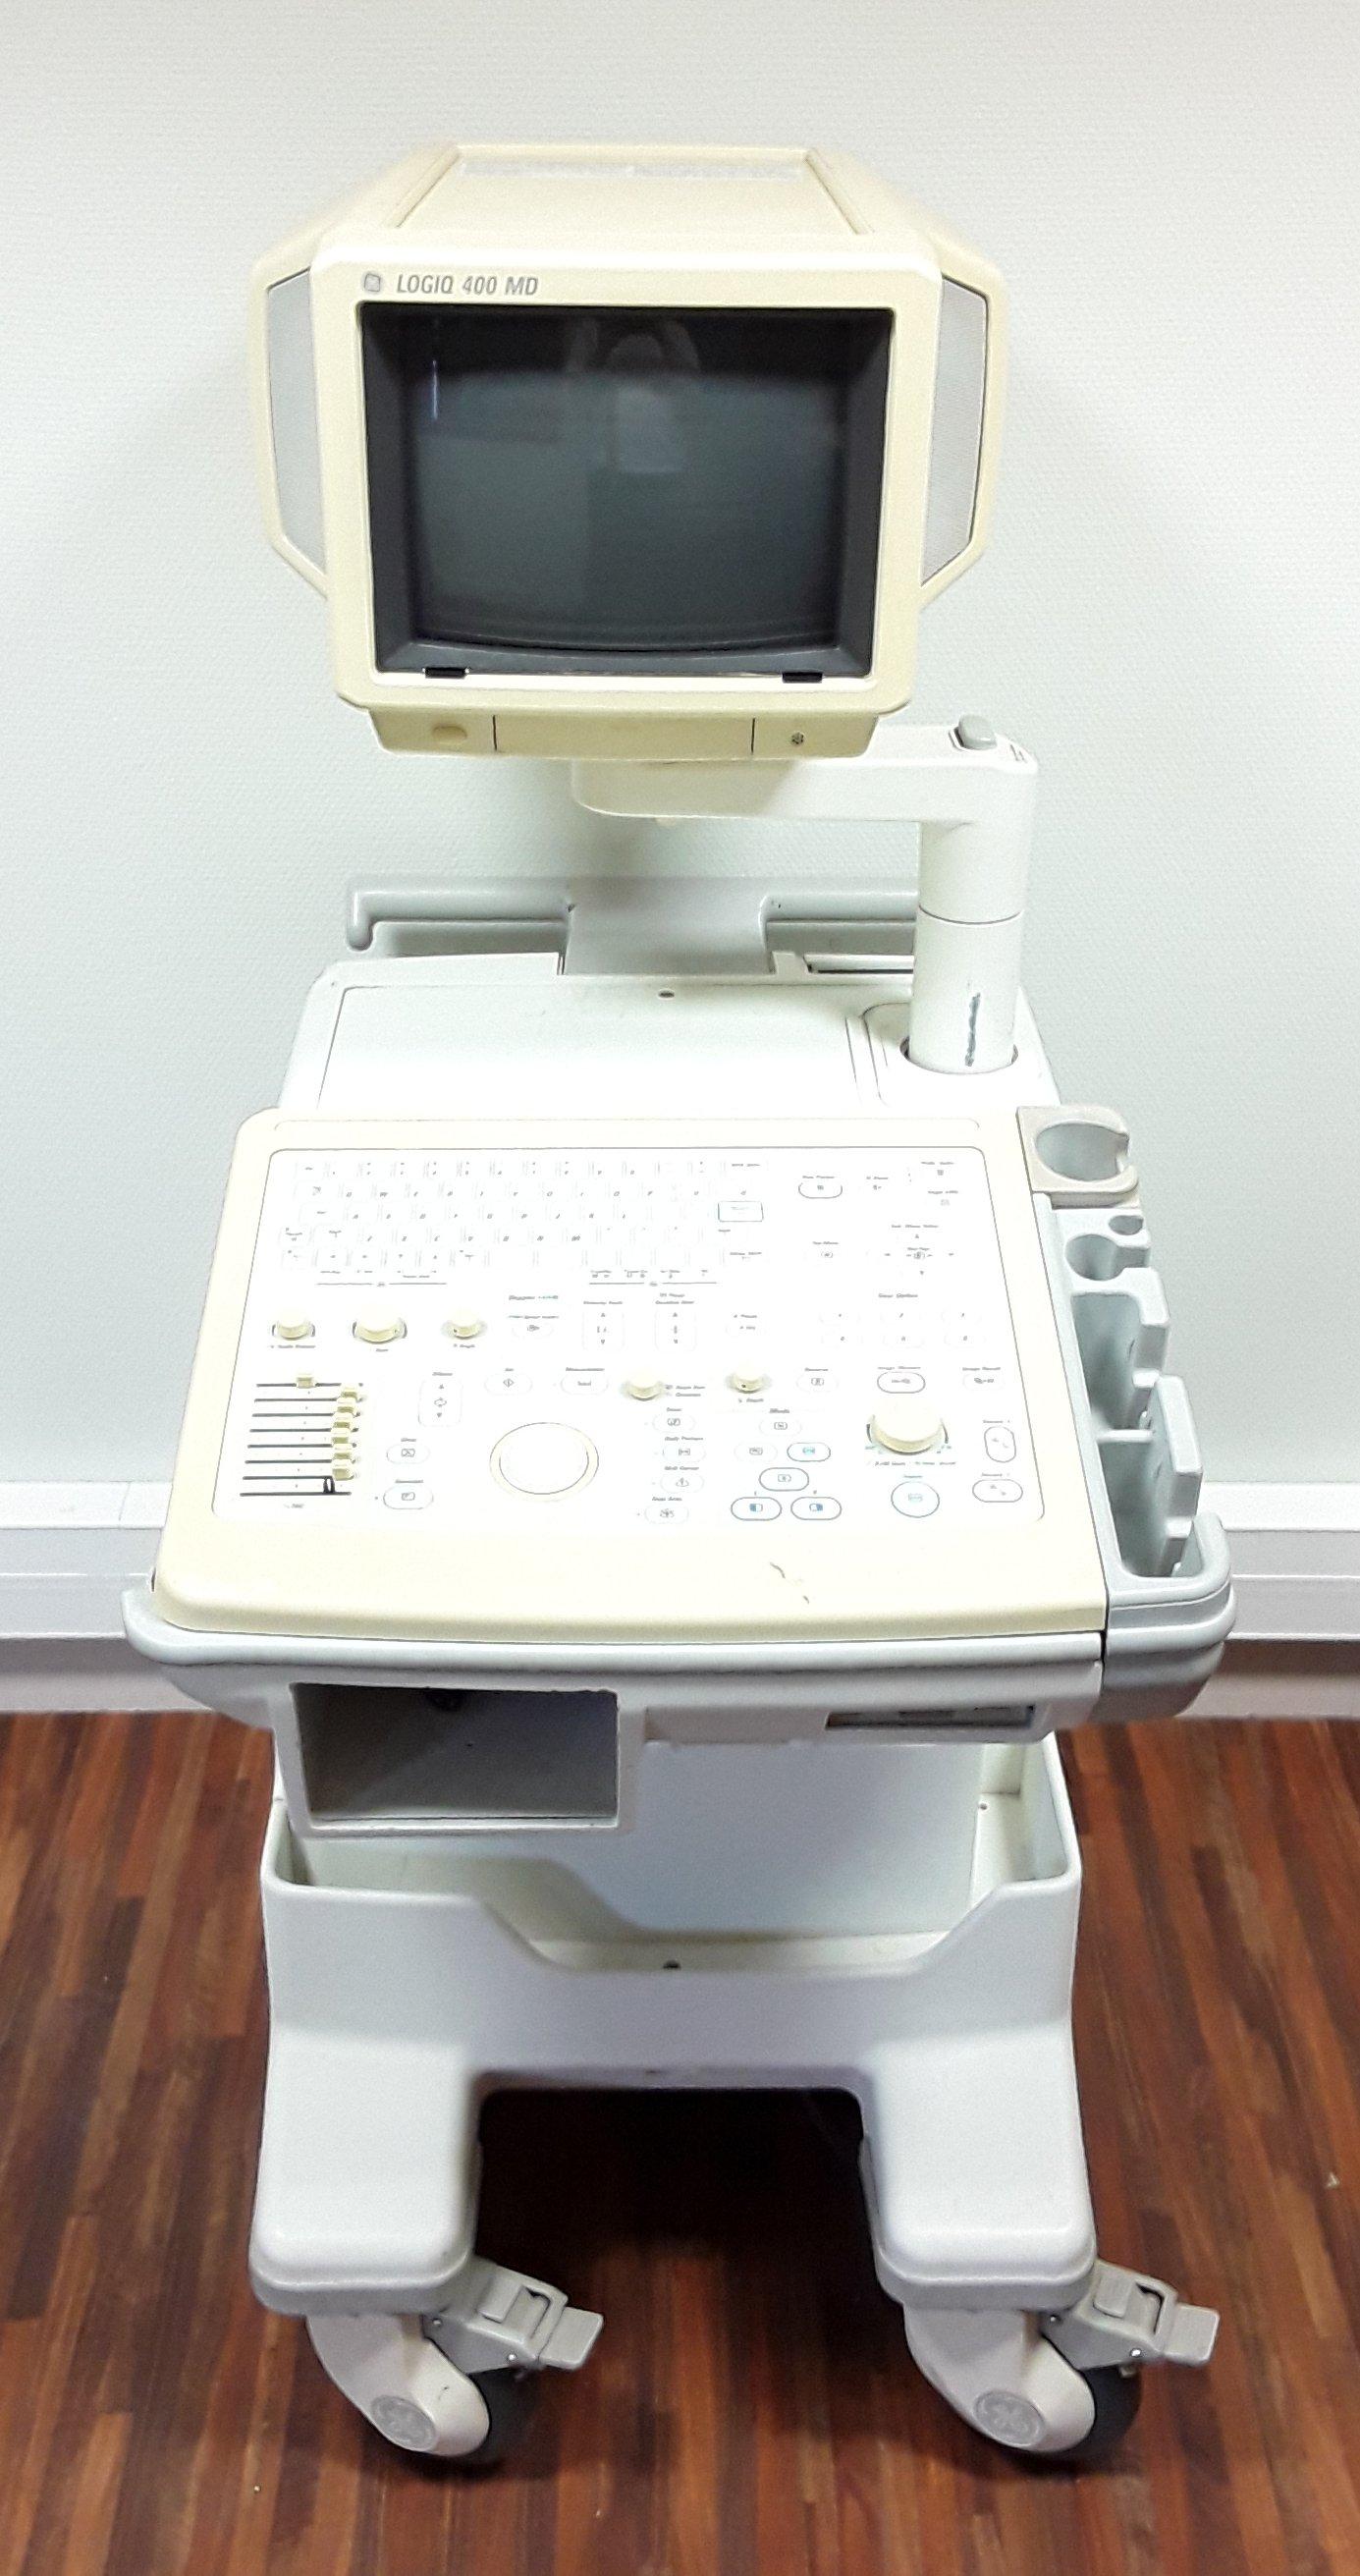 GE Logic 400 MD Ultrasound